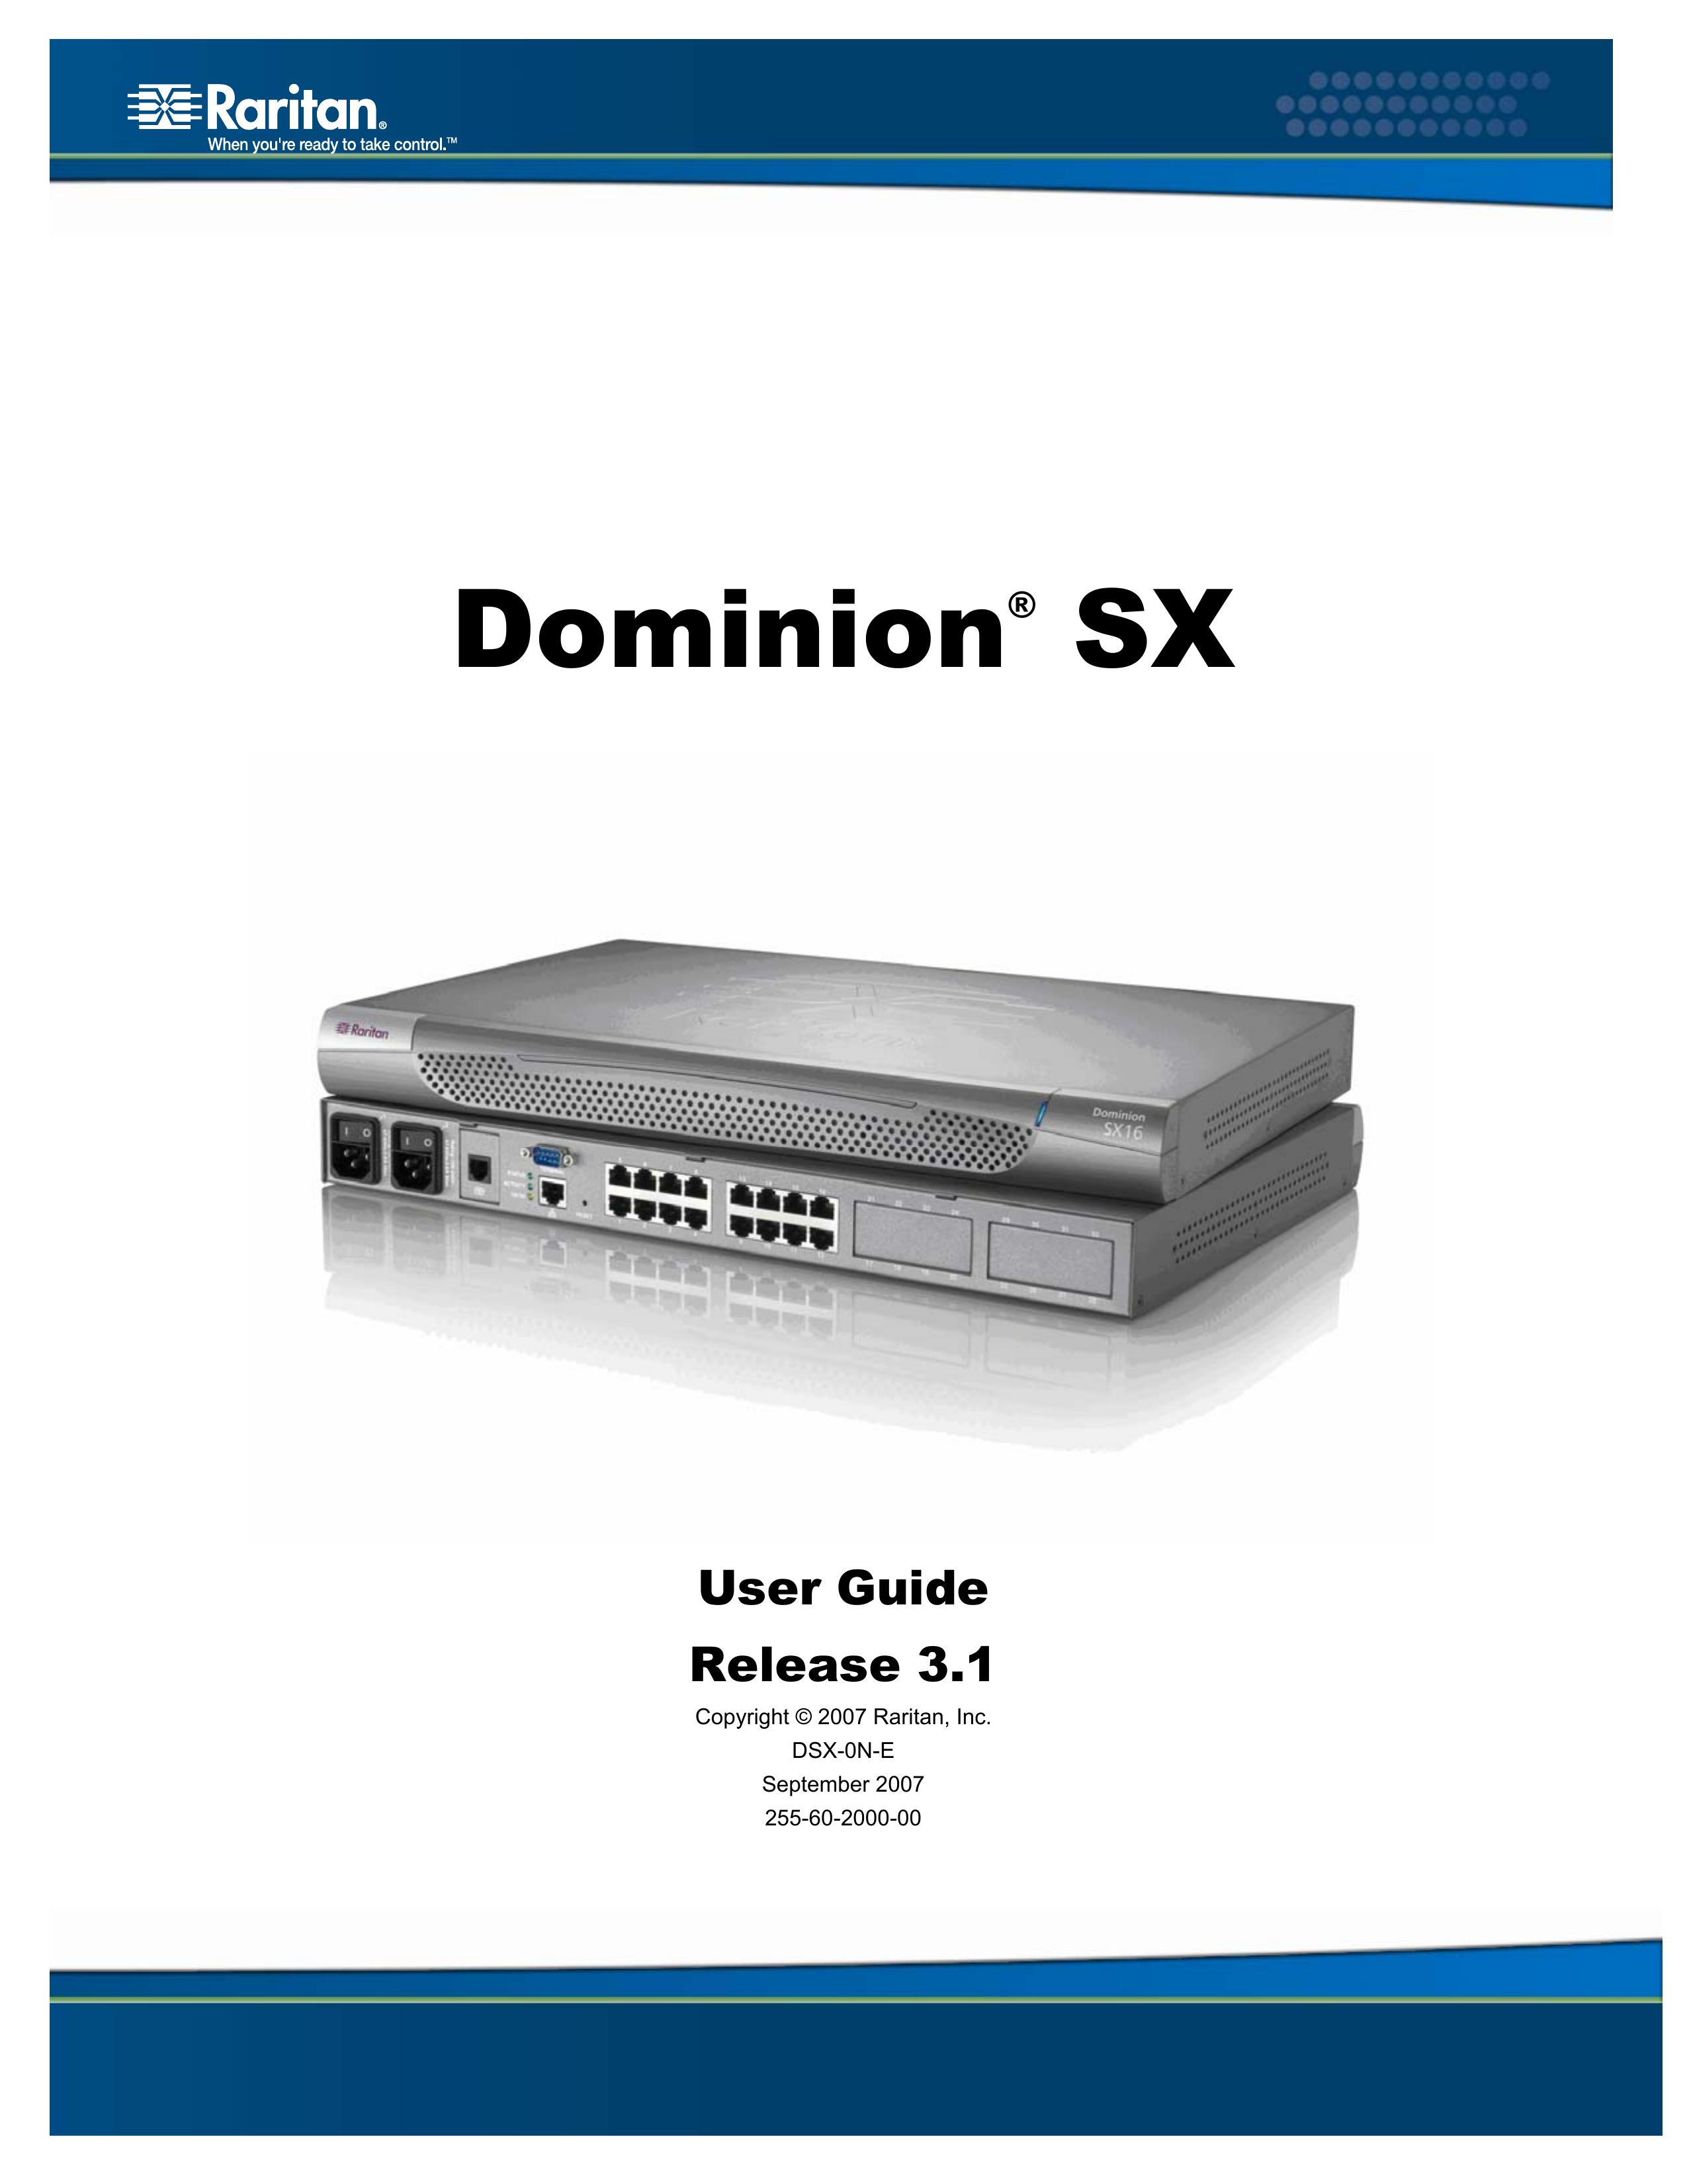 Raritan Computer DSX-0N-E Security Camera User Manual